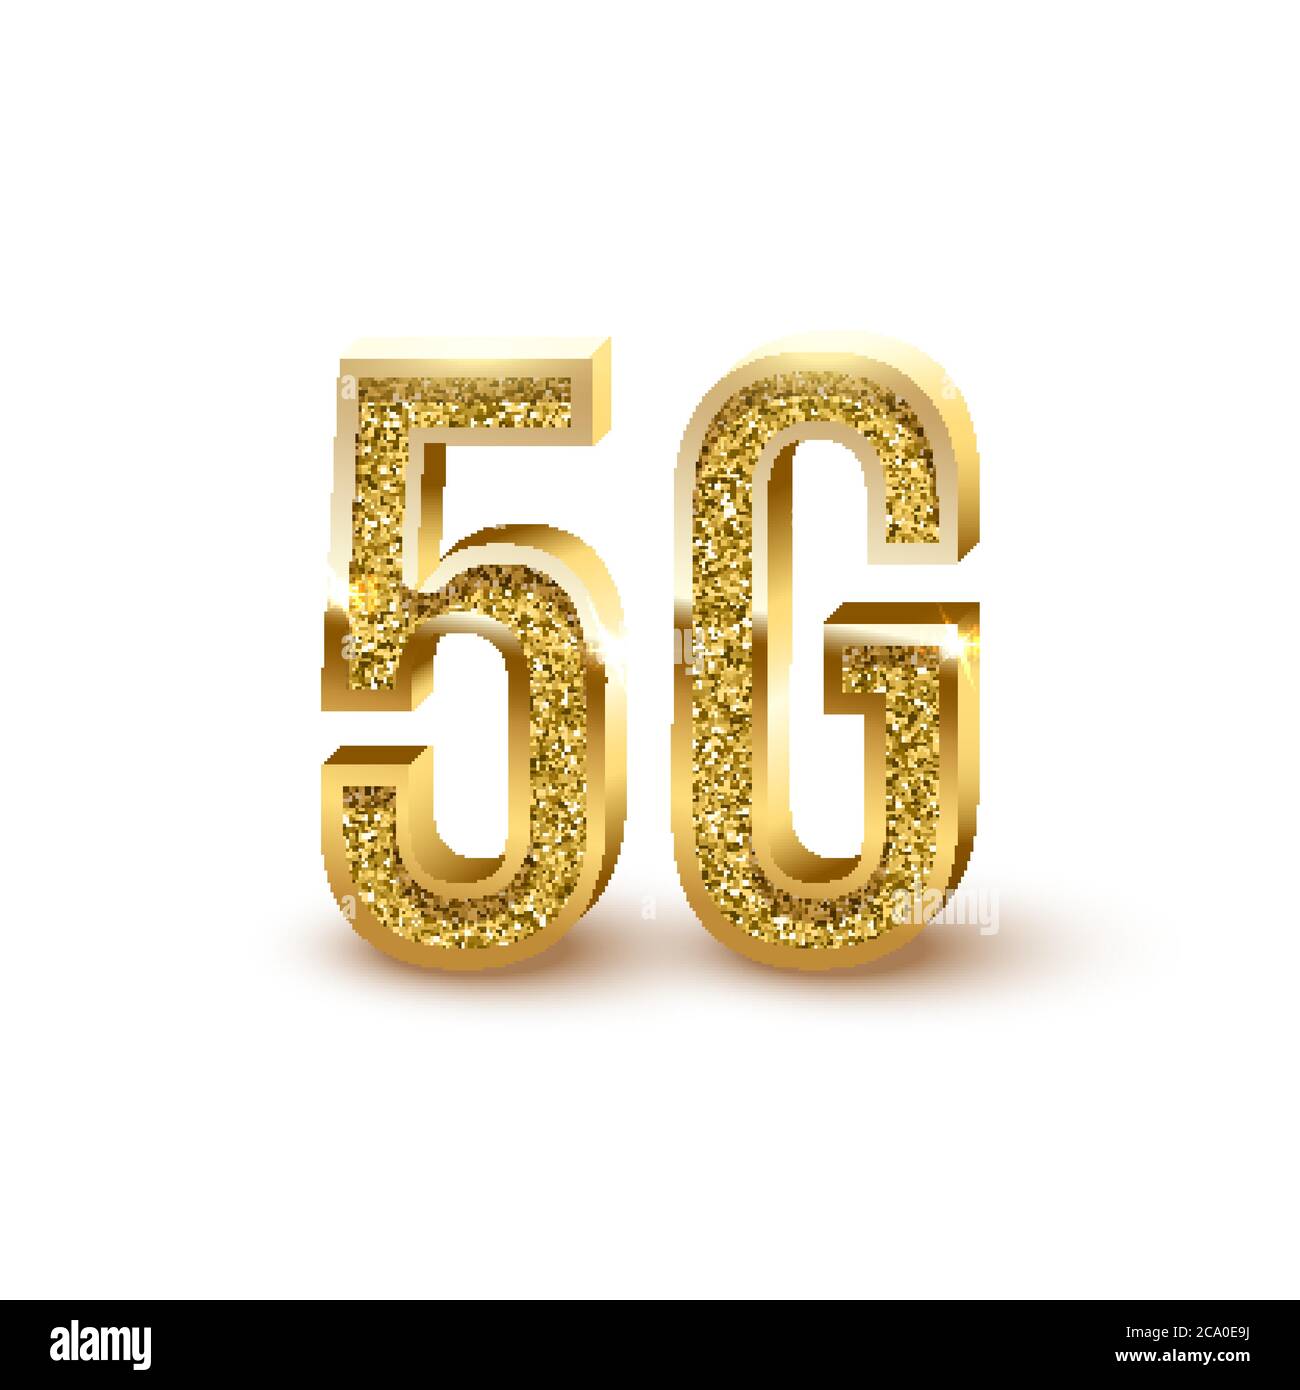 5G Internet connection 3D illustration Stock Vector